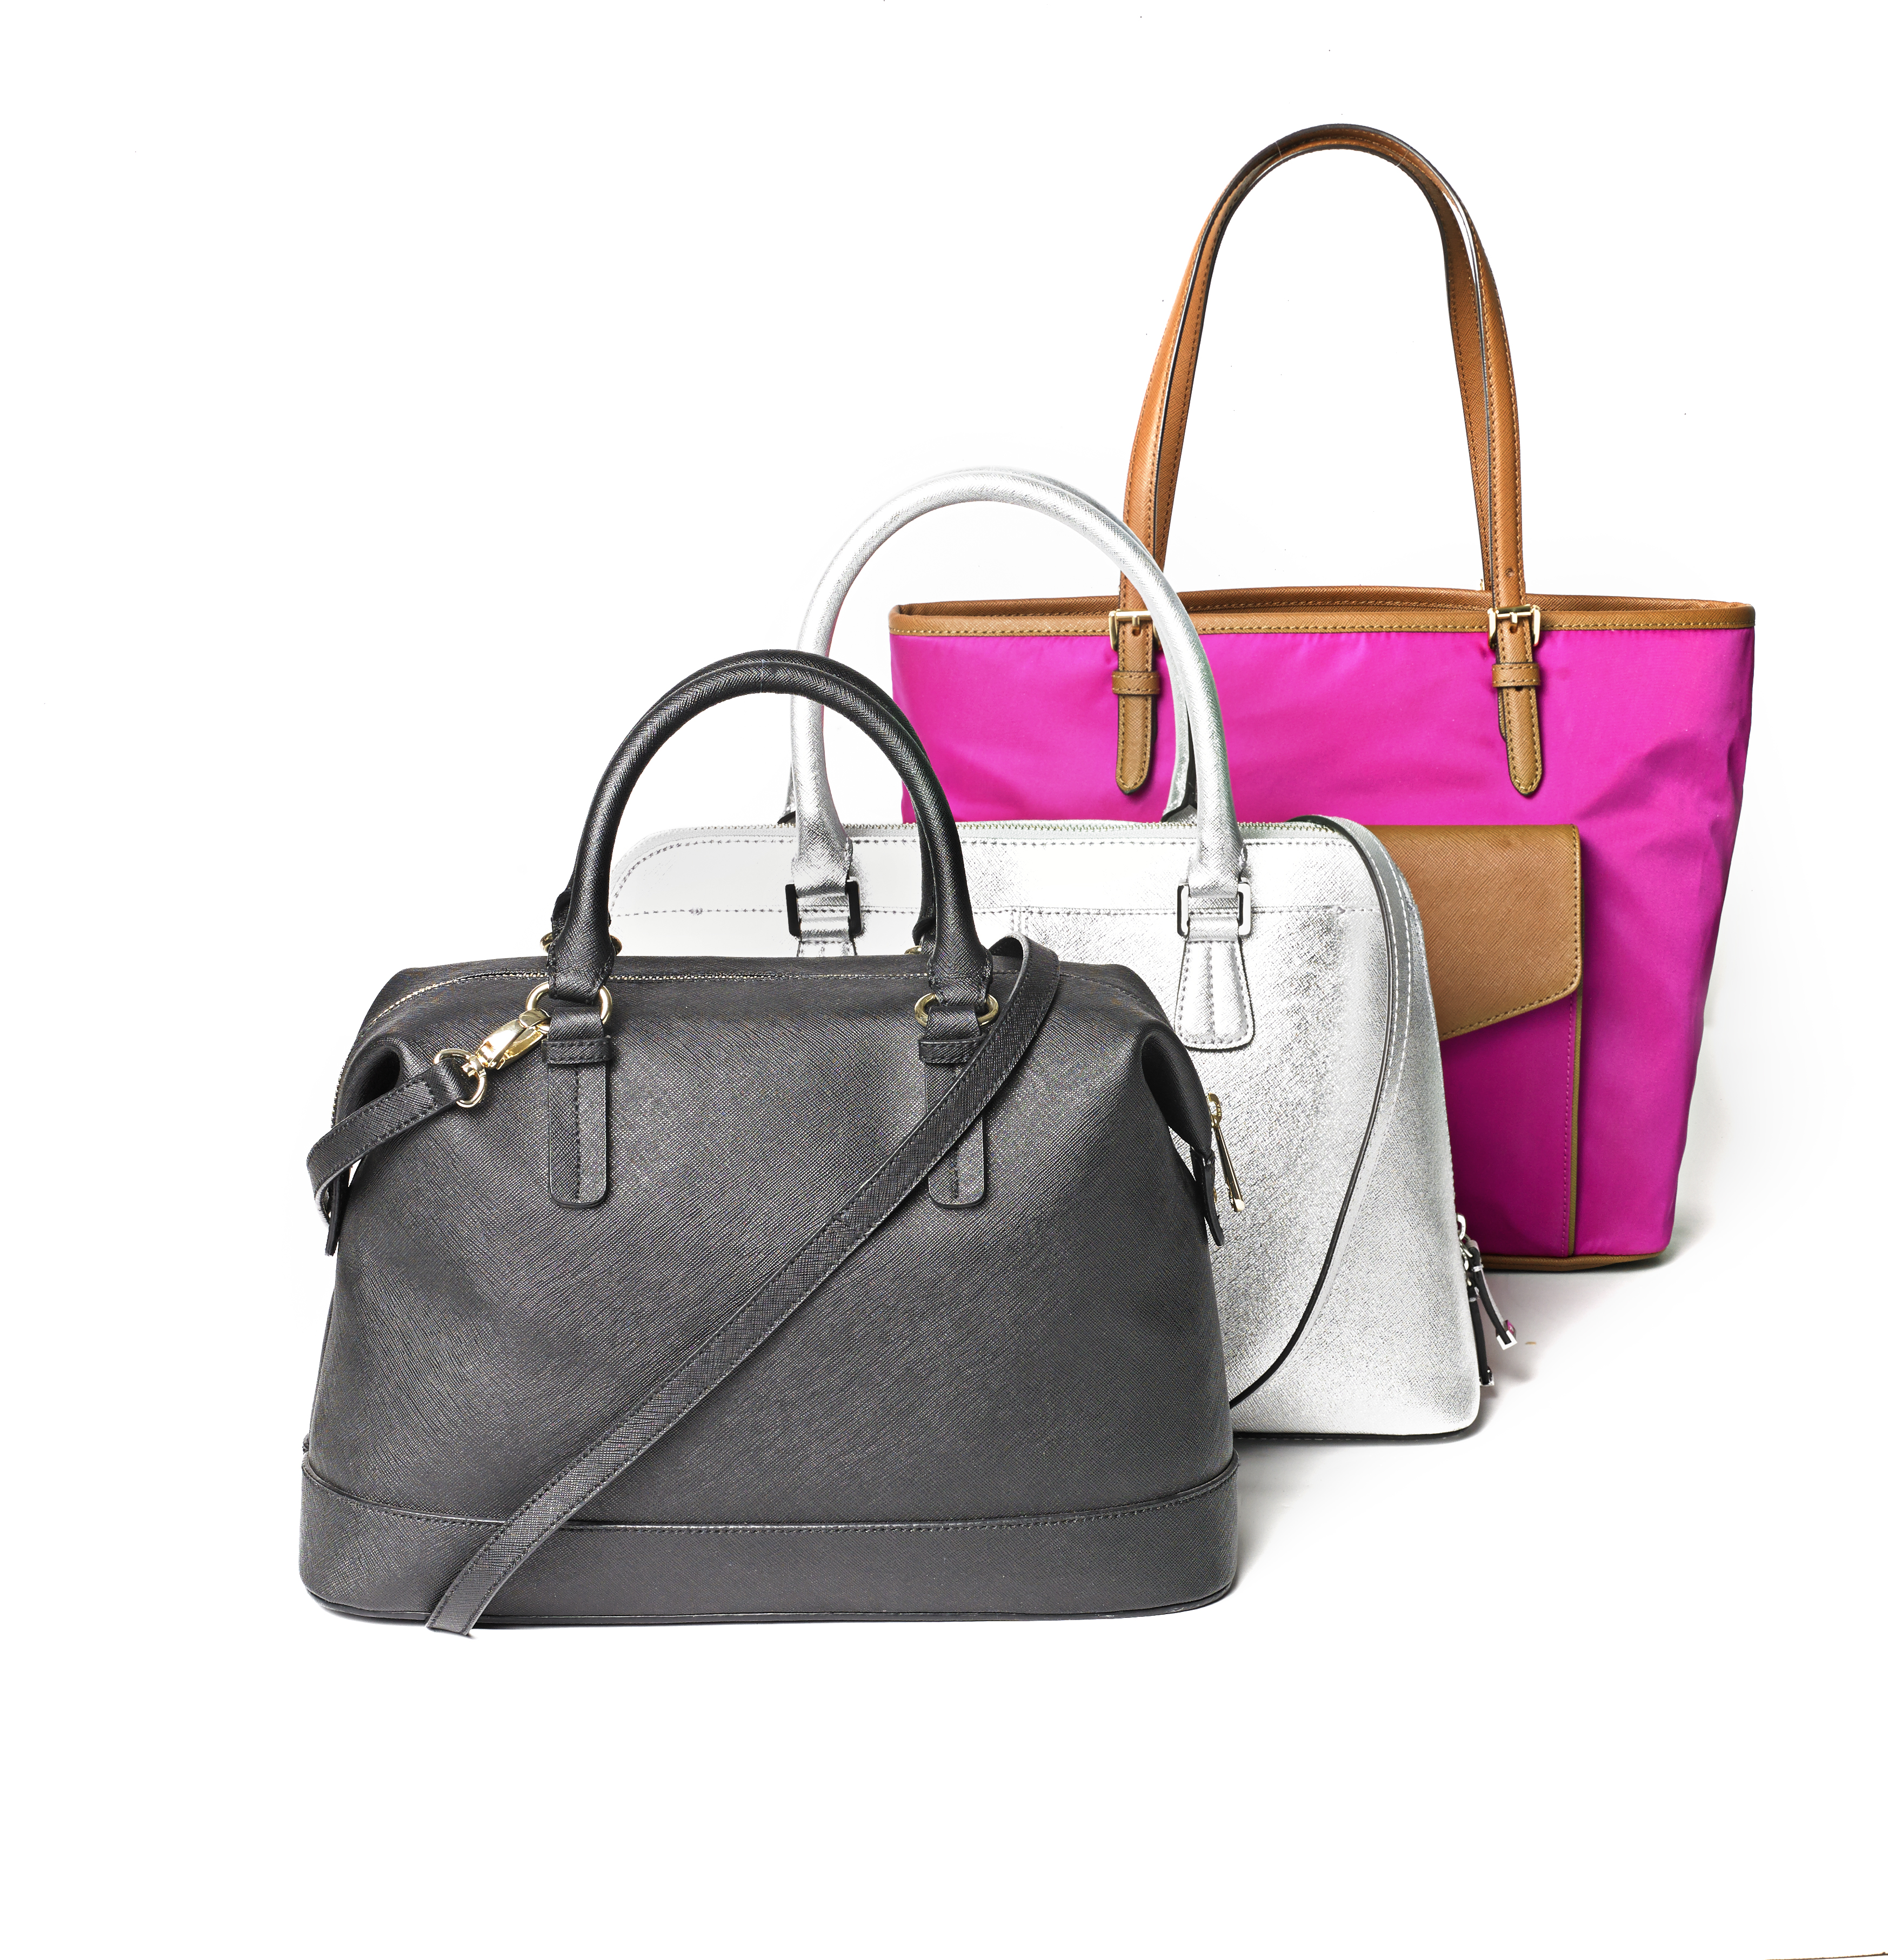 Macys Coupon For Designer Handbags | Jaguar Clubs of North America